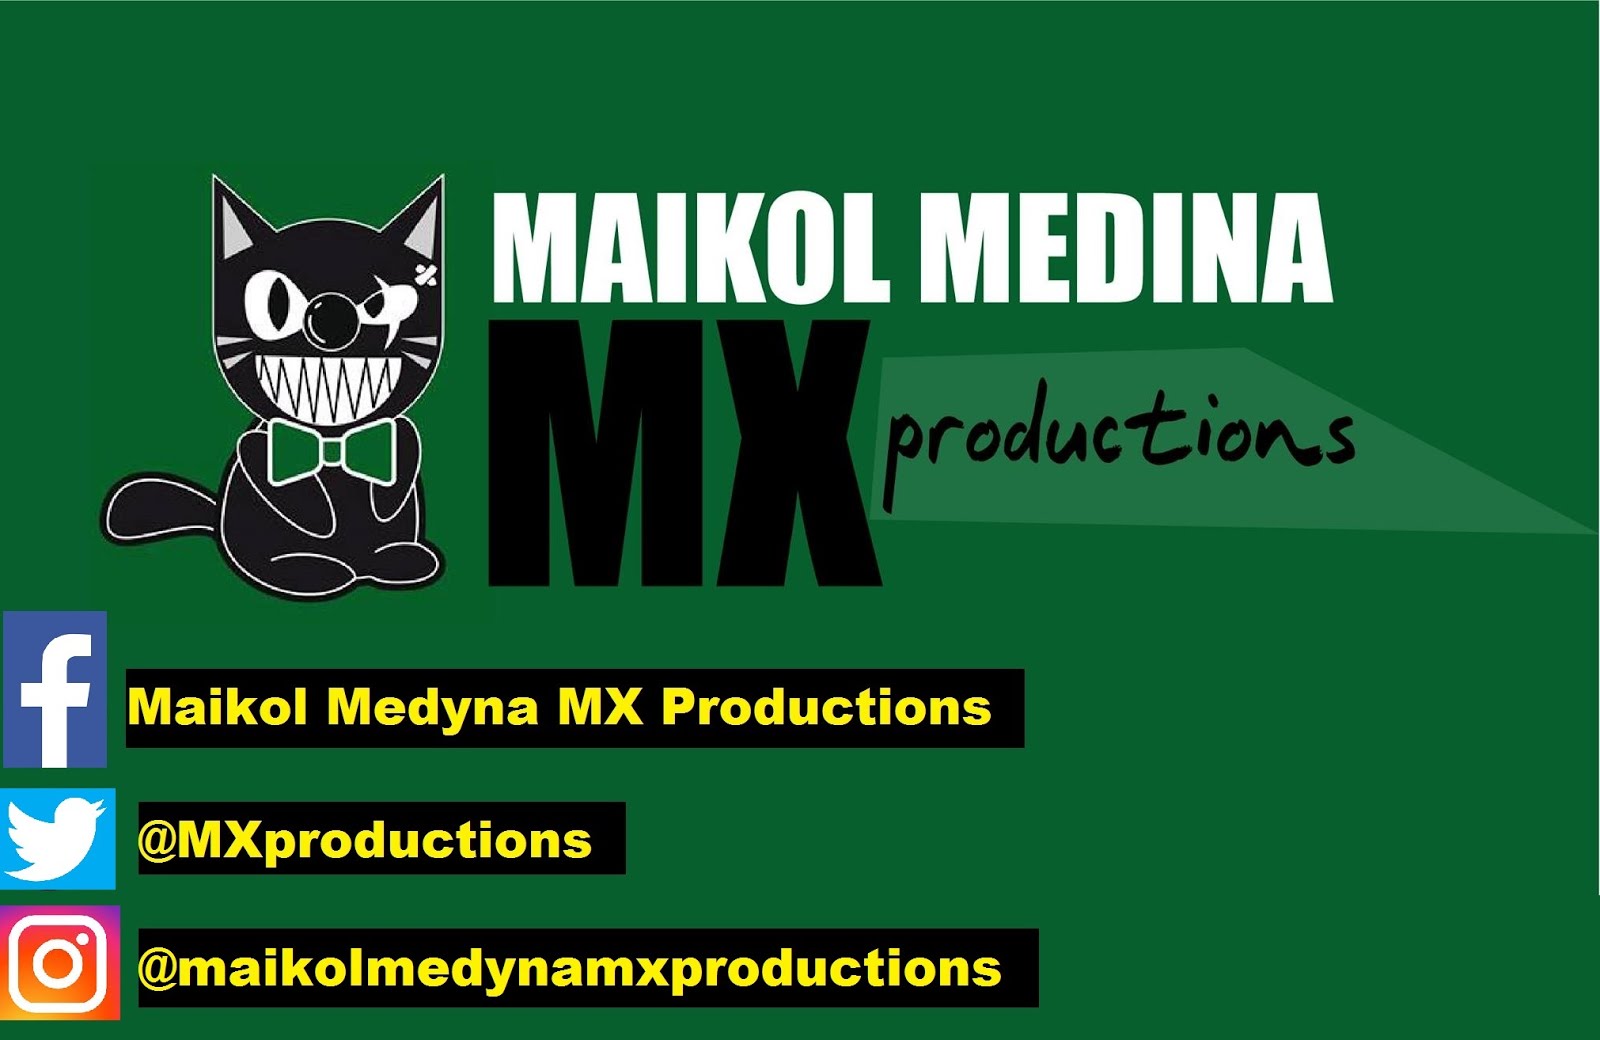 MX Productions